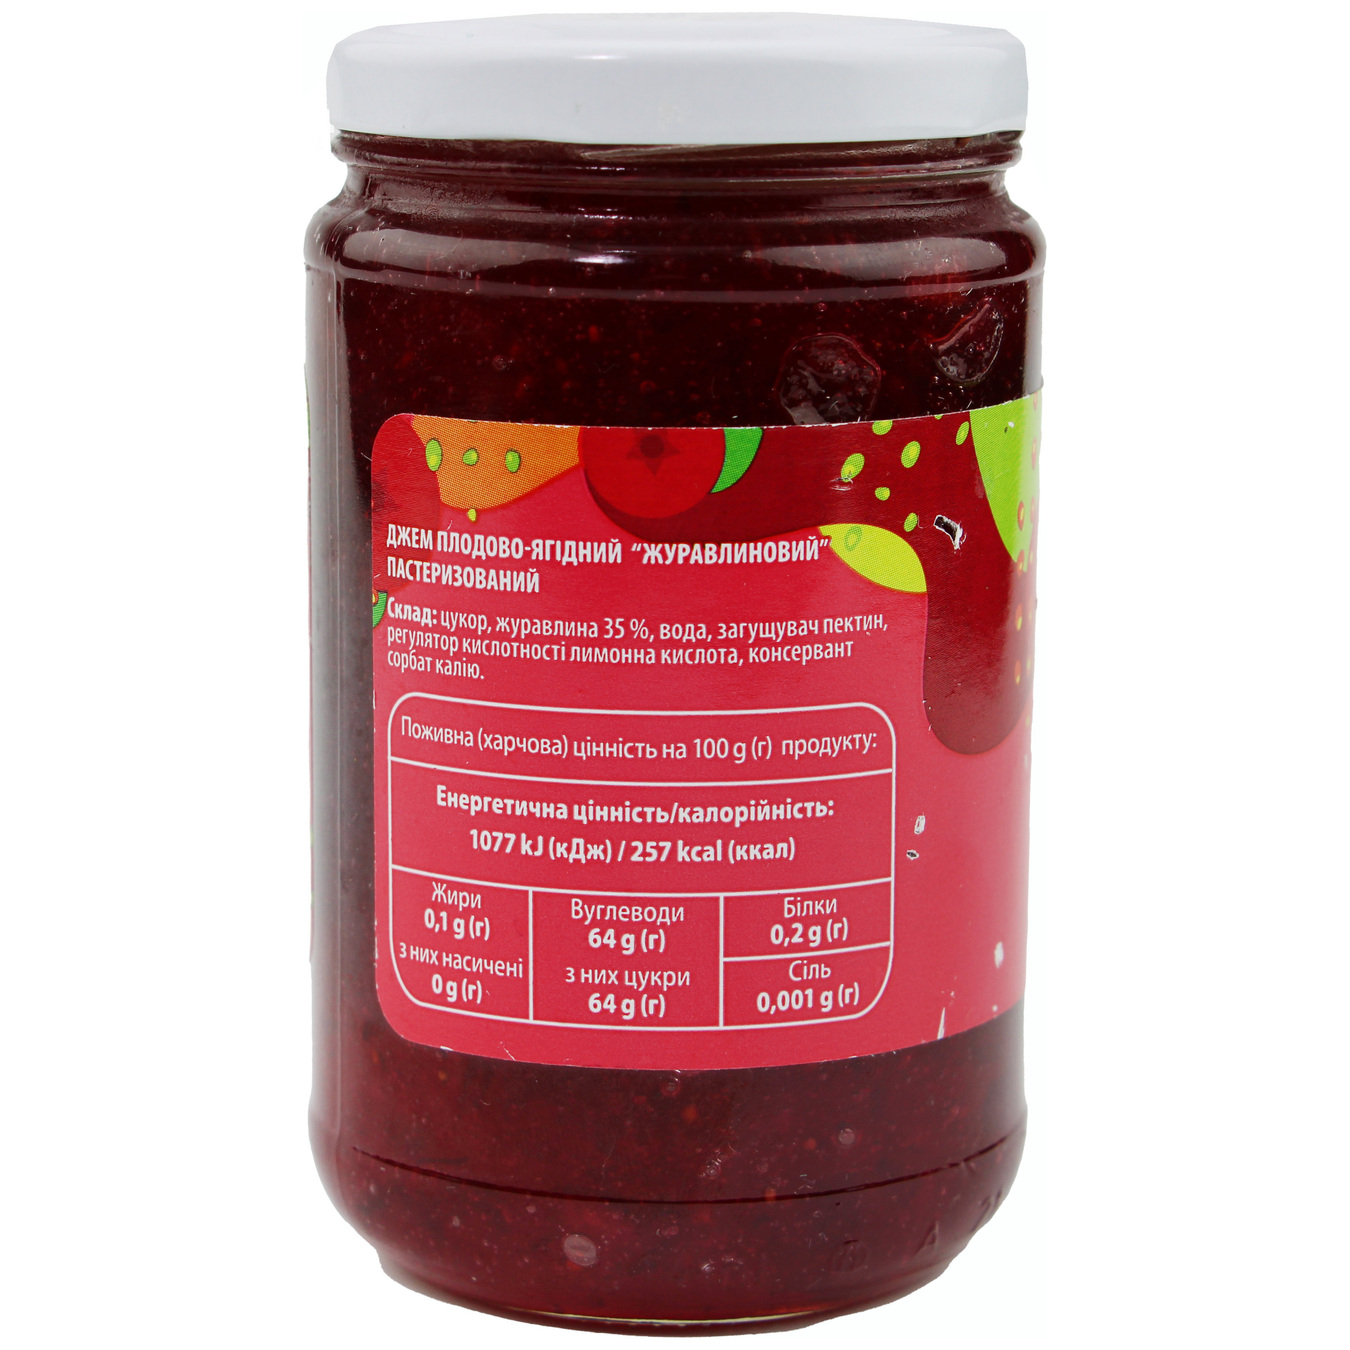 NOVUS Cranberry Jam 375g 3